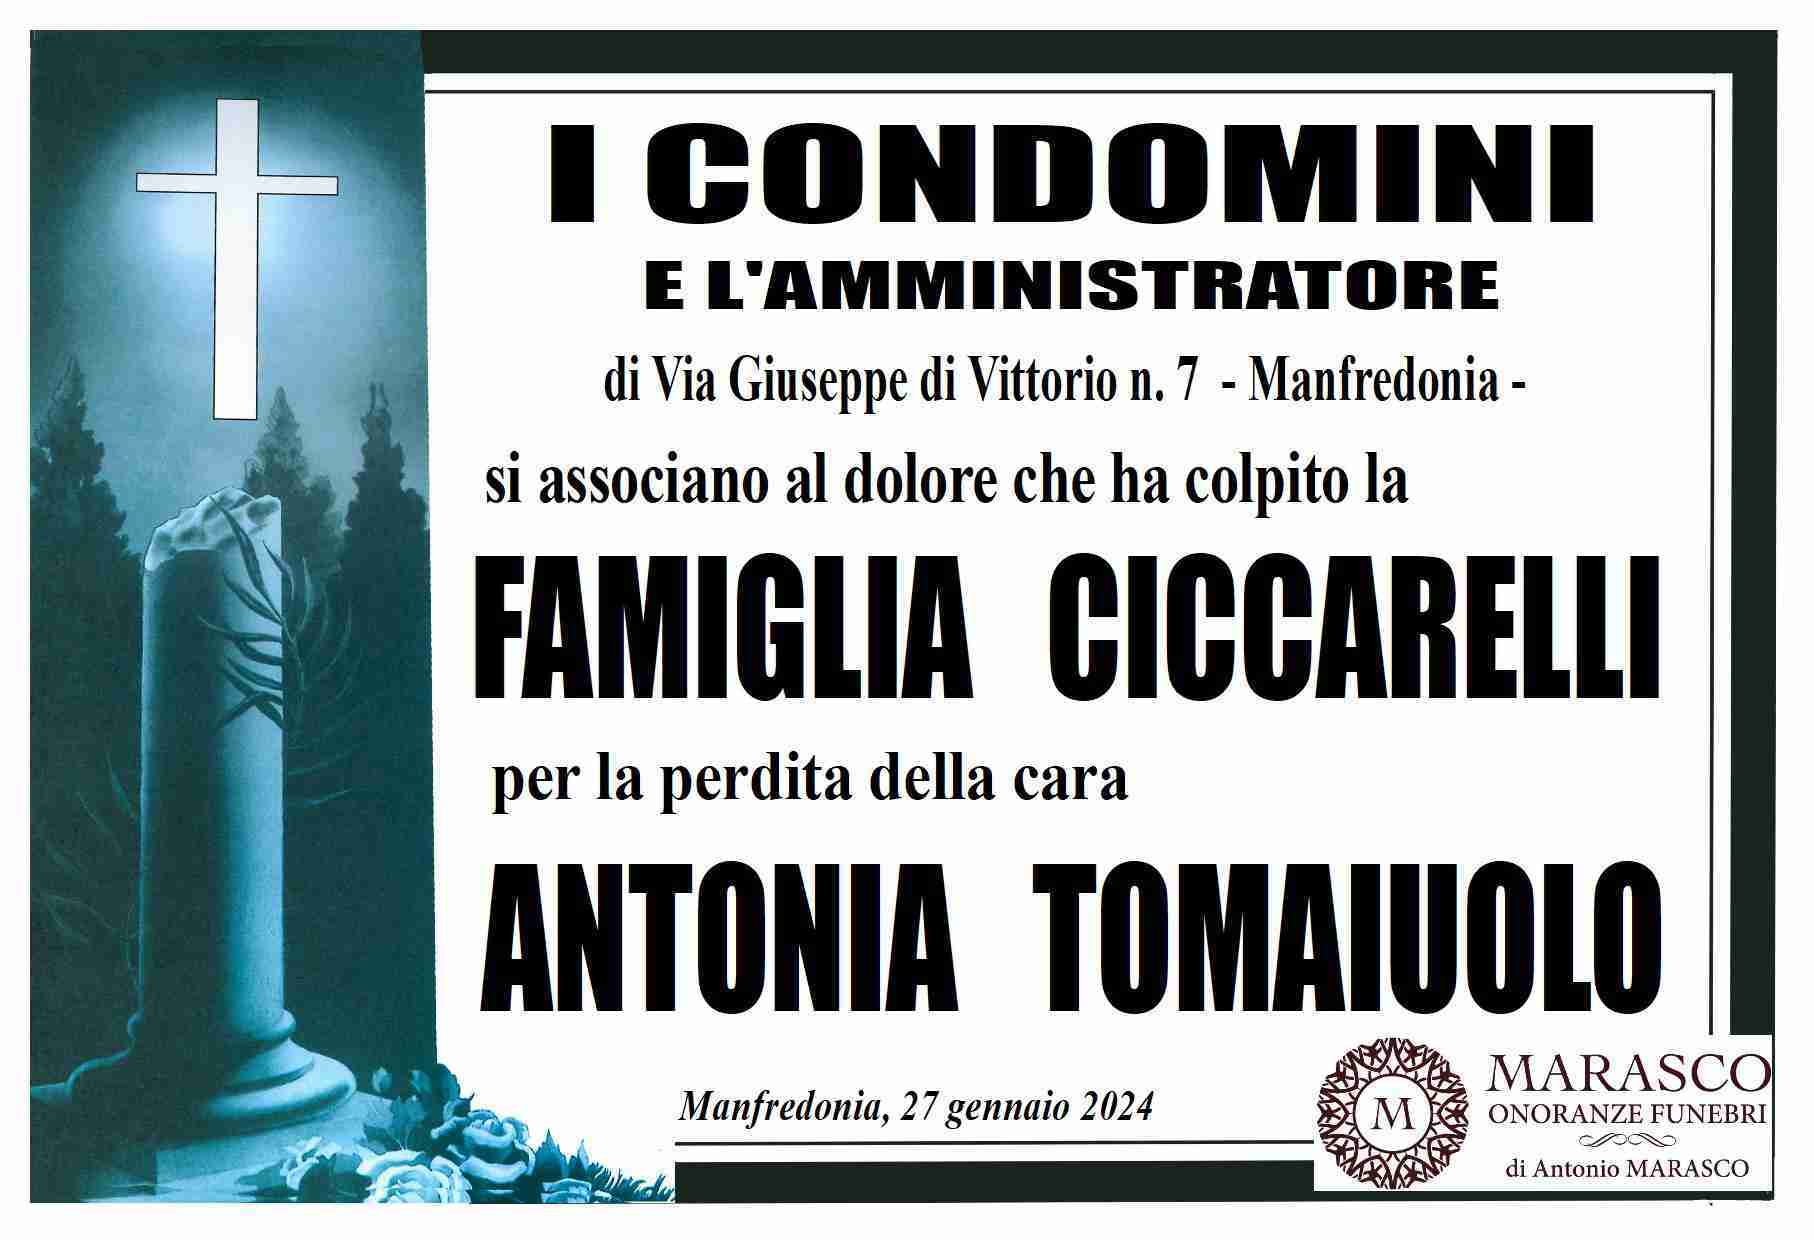 Antonia Tomaiuolo in Ciccarelli